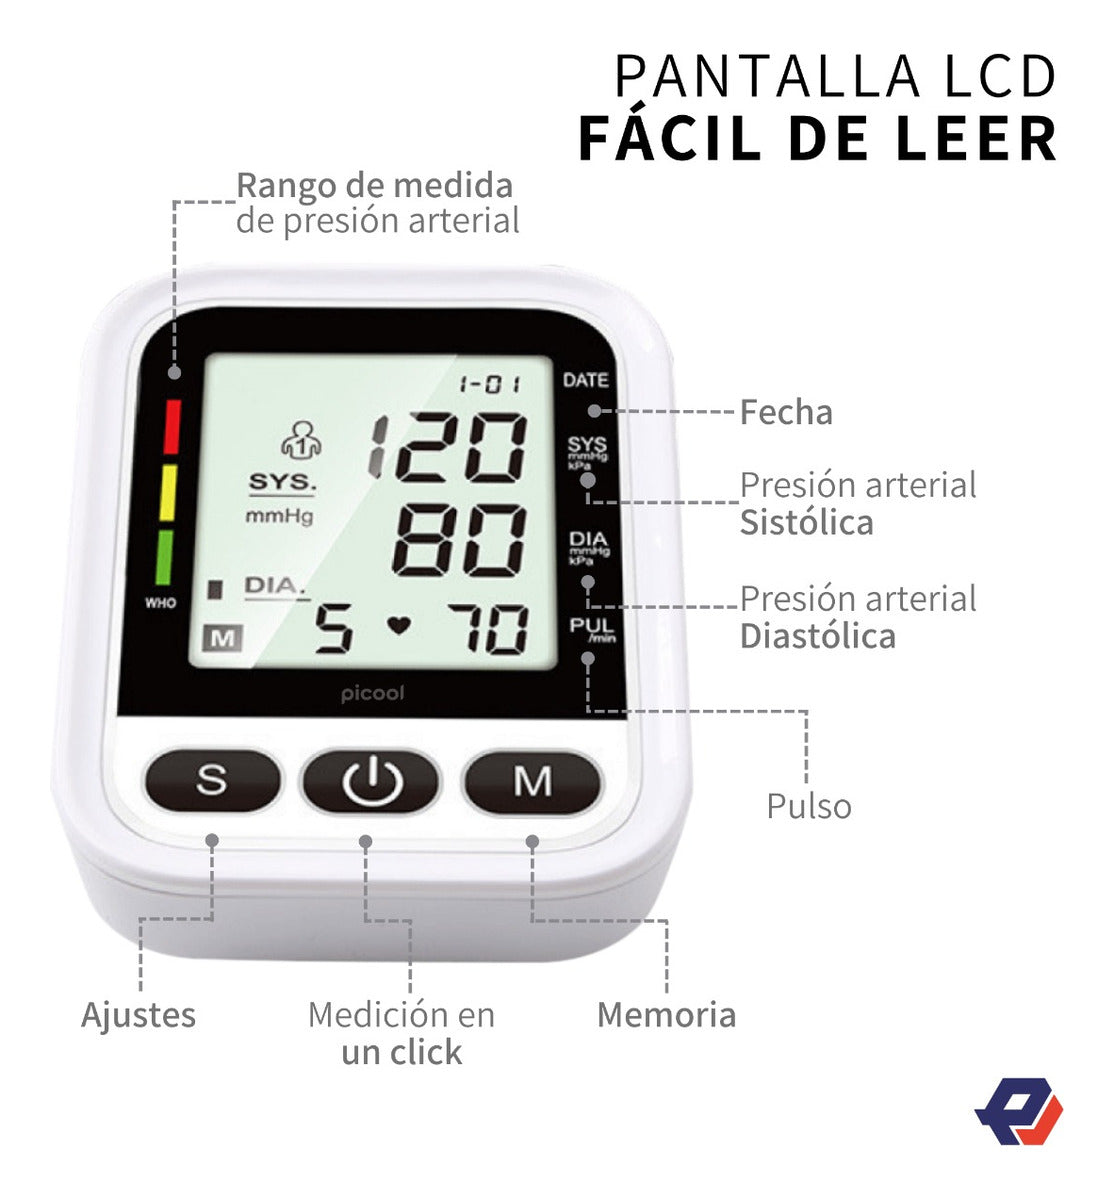 Monitor de Presión Arterial para Brazo con Pantalla LCD Digital de